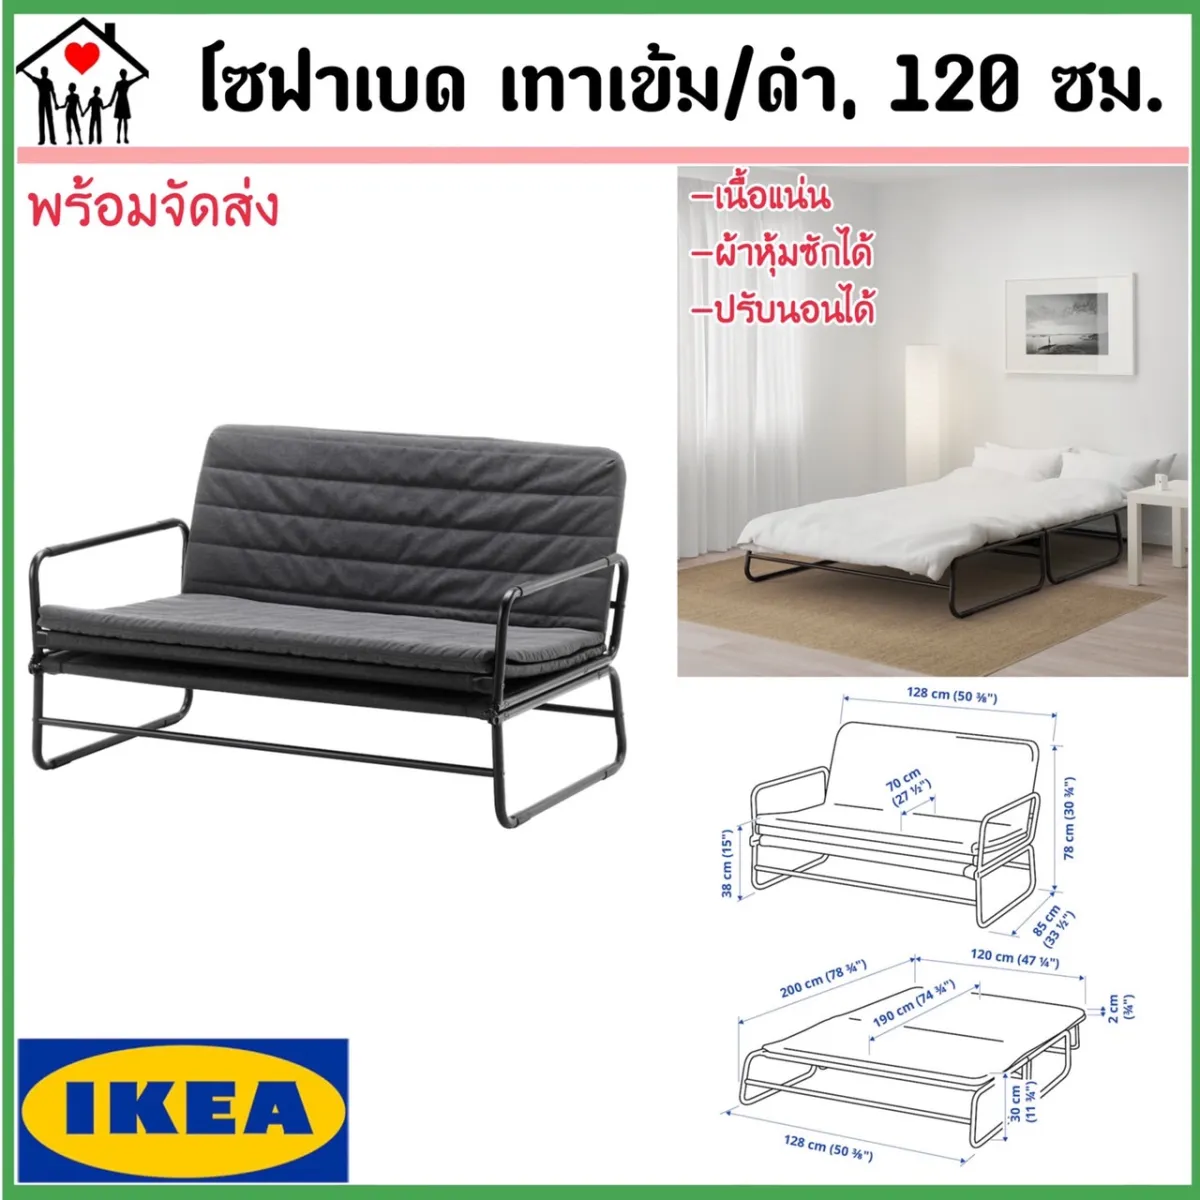 Ikea อิเกีย Hammarn ฮัมมาร์น โซฟาเบด,โซฟา โซฟาปรับนอนได้ คนีซา เทาเข้ม/ดำ,  120 ซม. | Lazada.Co.Th